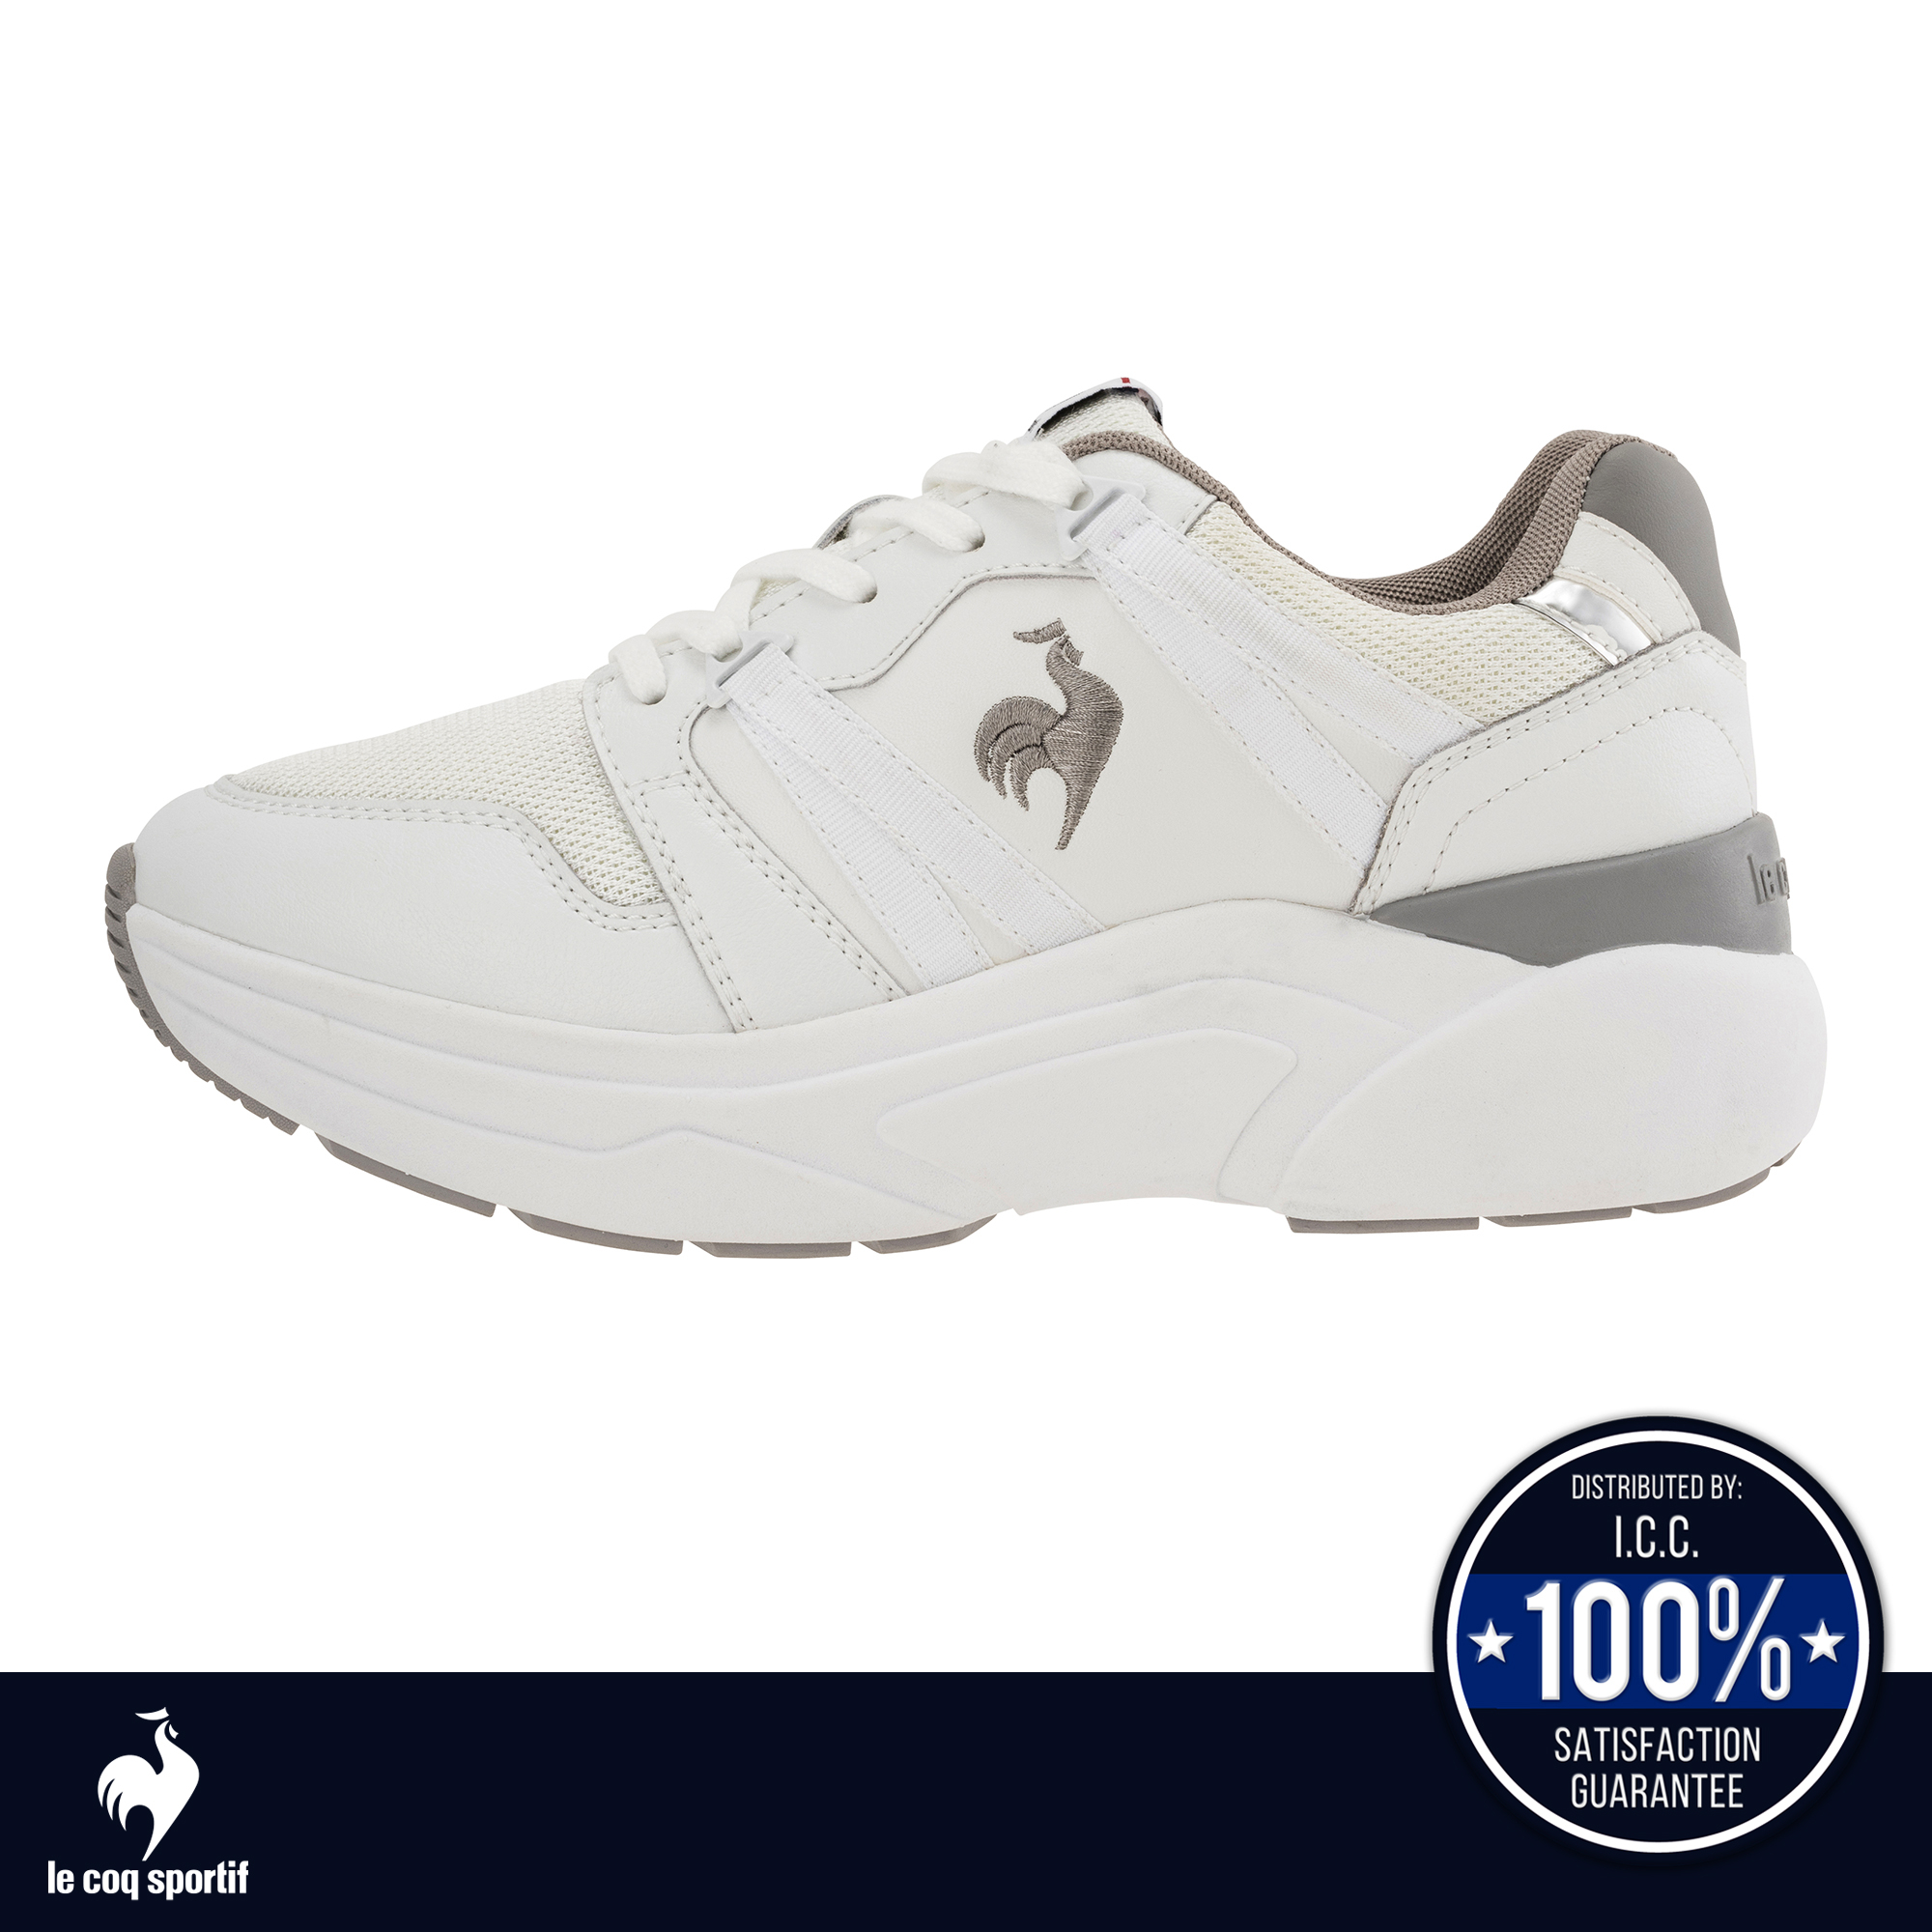 le coq sportif รองเท้าผู้หญิง รุ่น LCS BOULOGNE สีขาว-เงิน(รองเท้าผ้าใบสีขาว, รองเท้าแฟชั่น, แบบผูกเชือก, Unisex, lecoq)